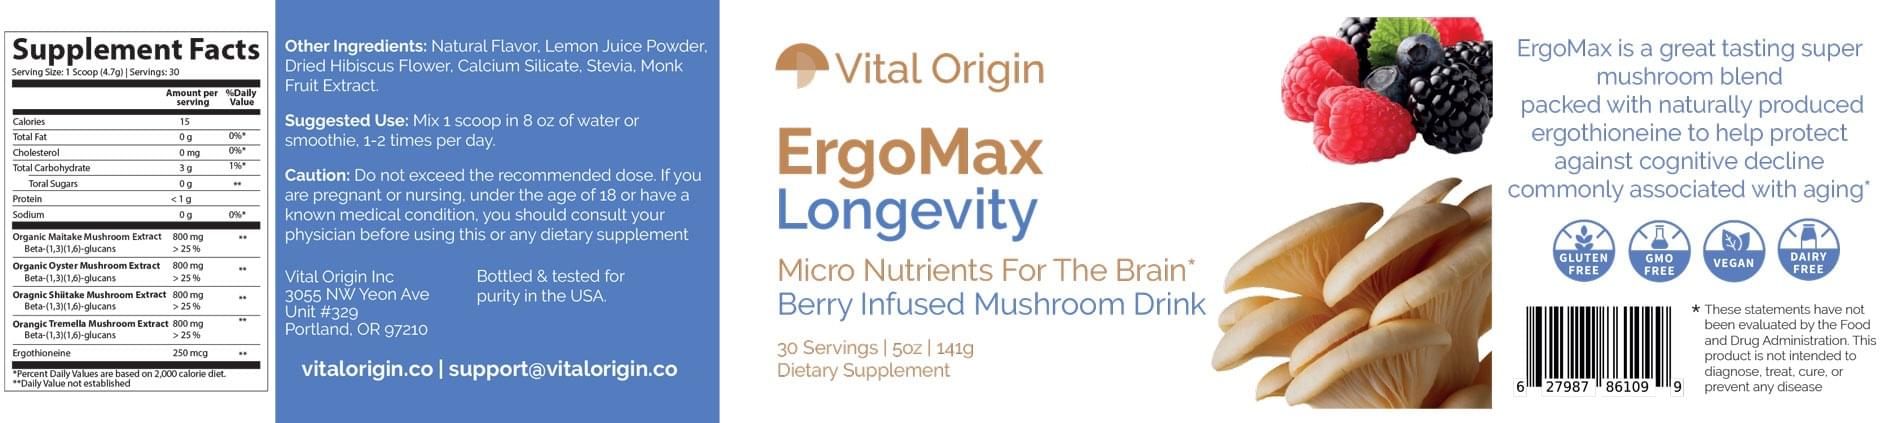 ErgoMax Longevity Supplement Facts